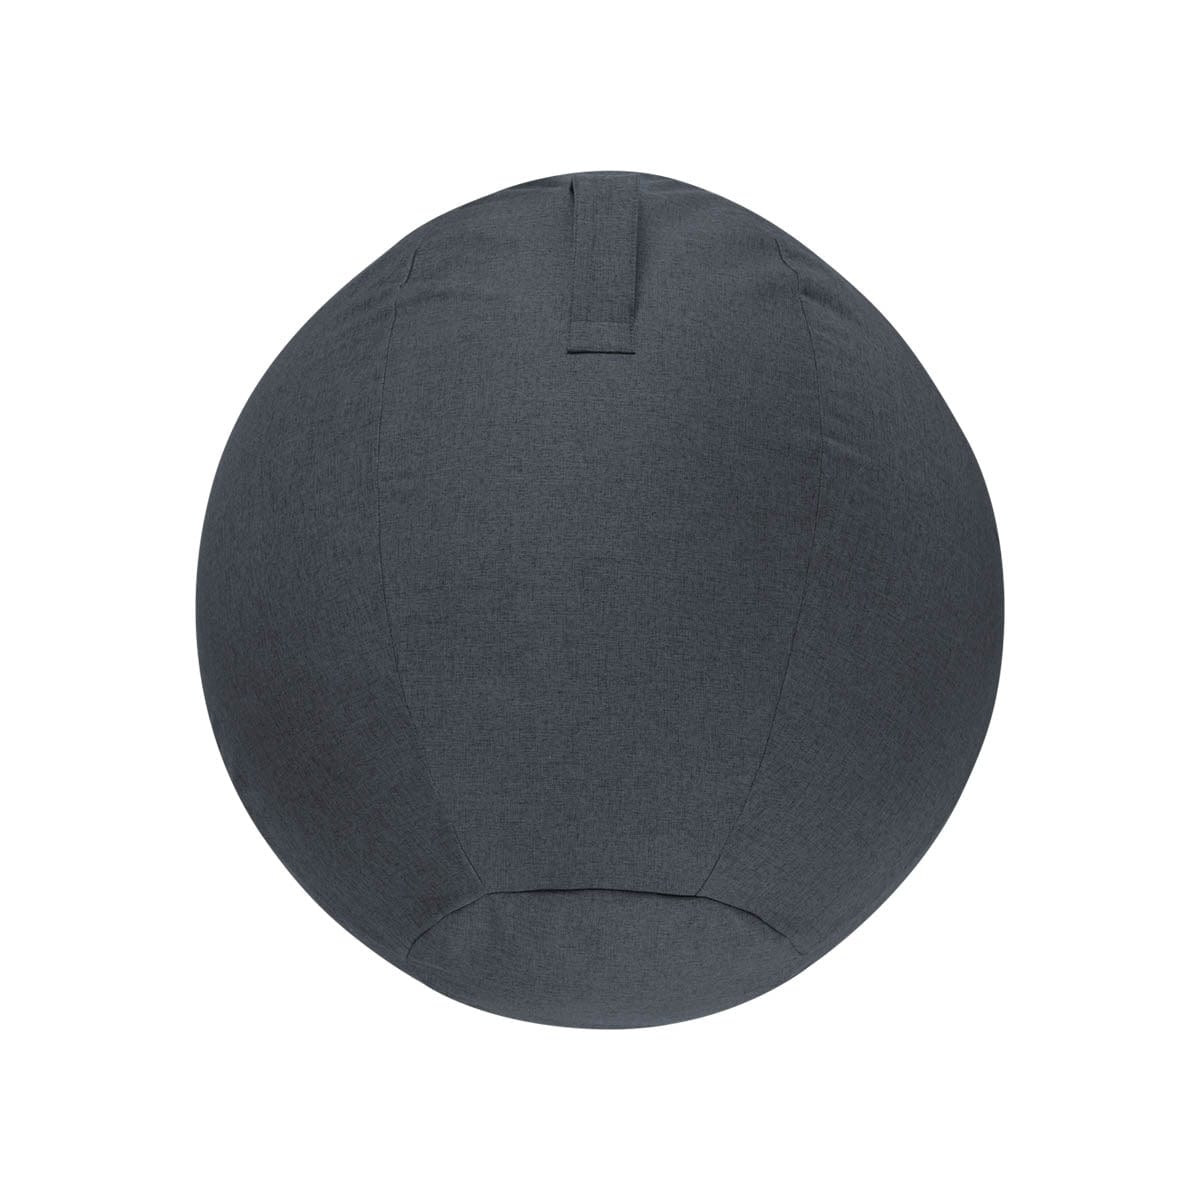 Exerfit Yogi Ball with Fabric Cover dark grey